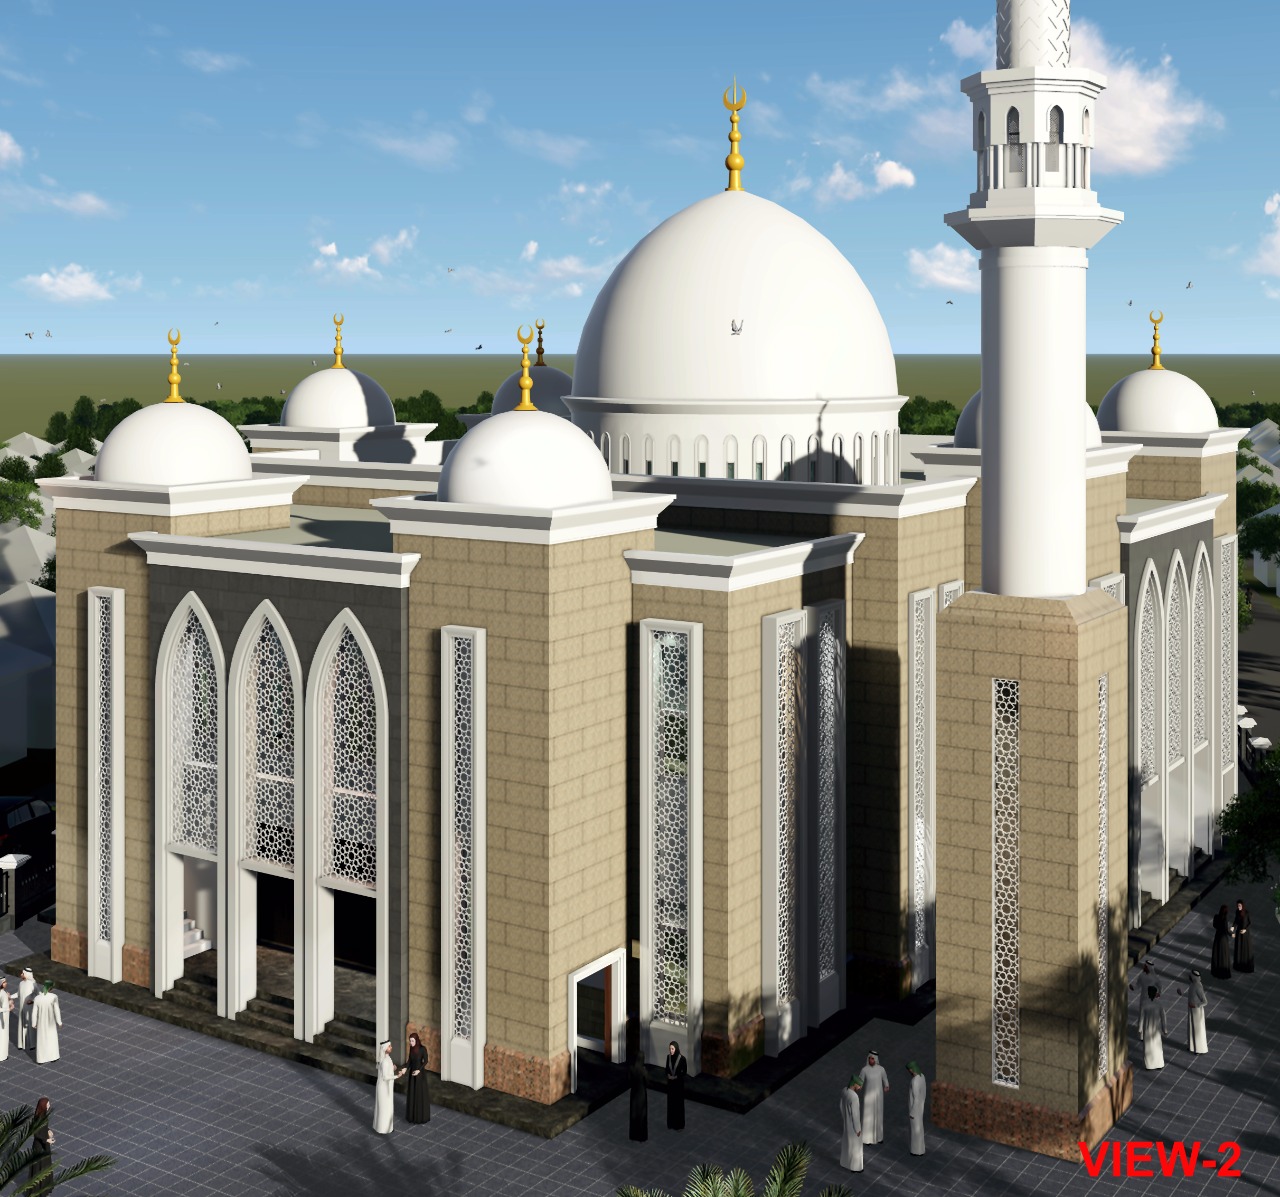 Rencana Pembangunan Masjid Akmaliah